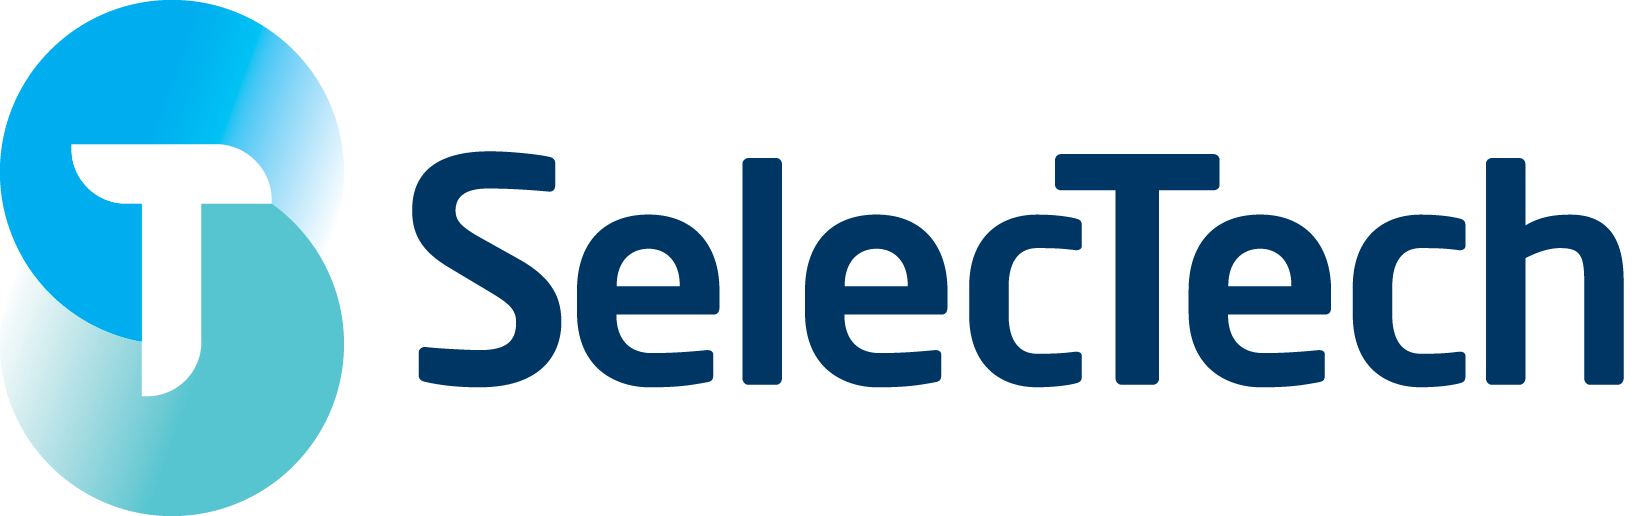 SelecTech